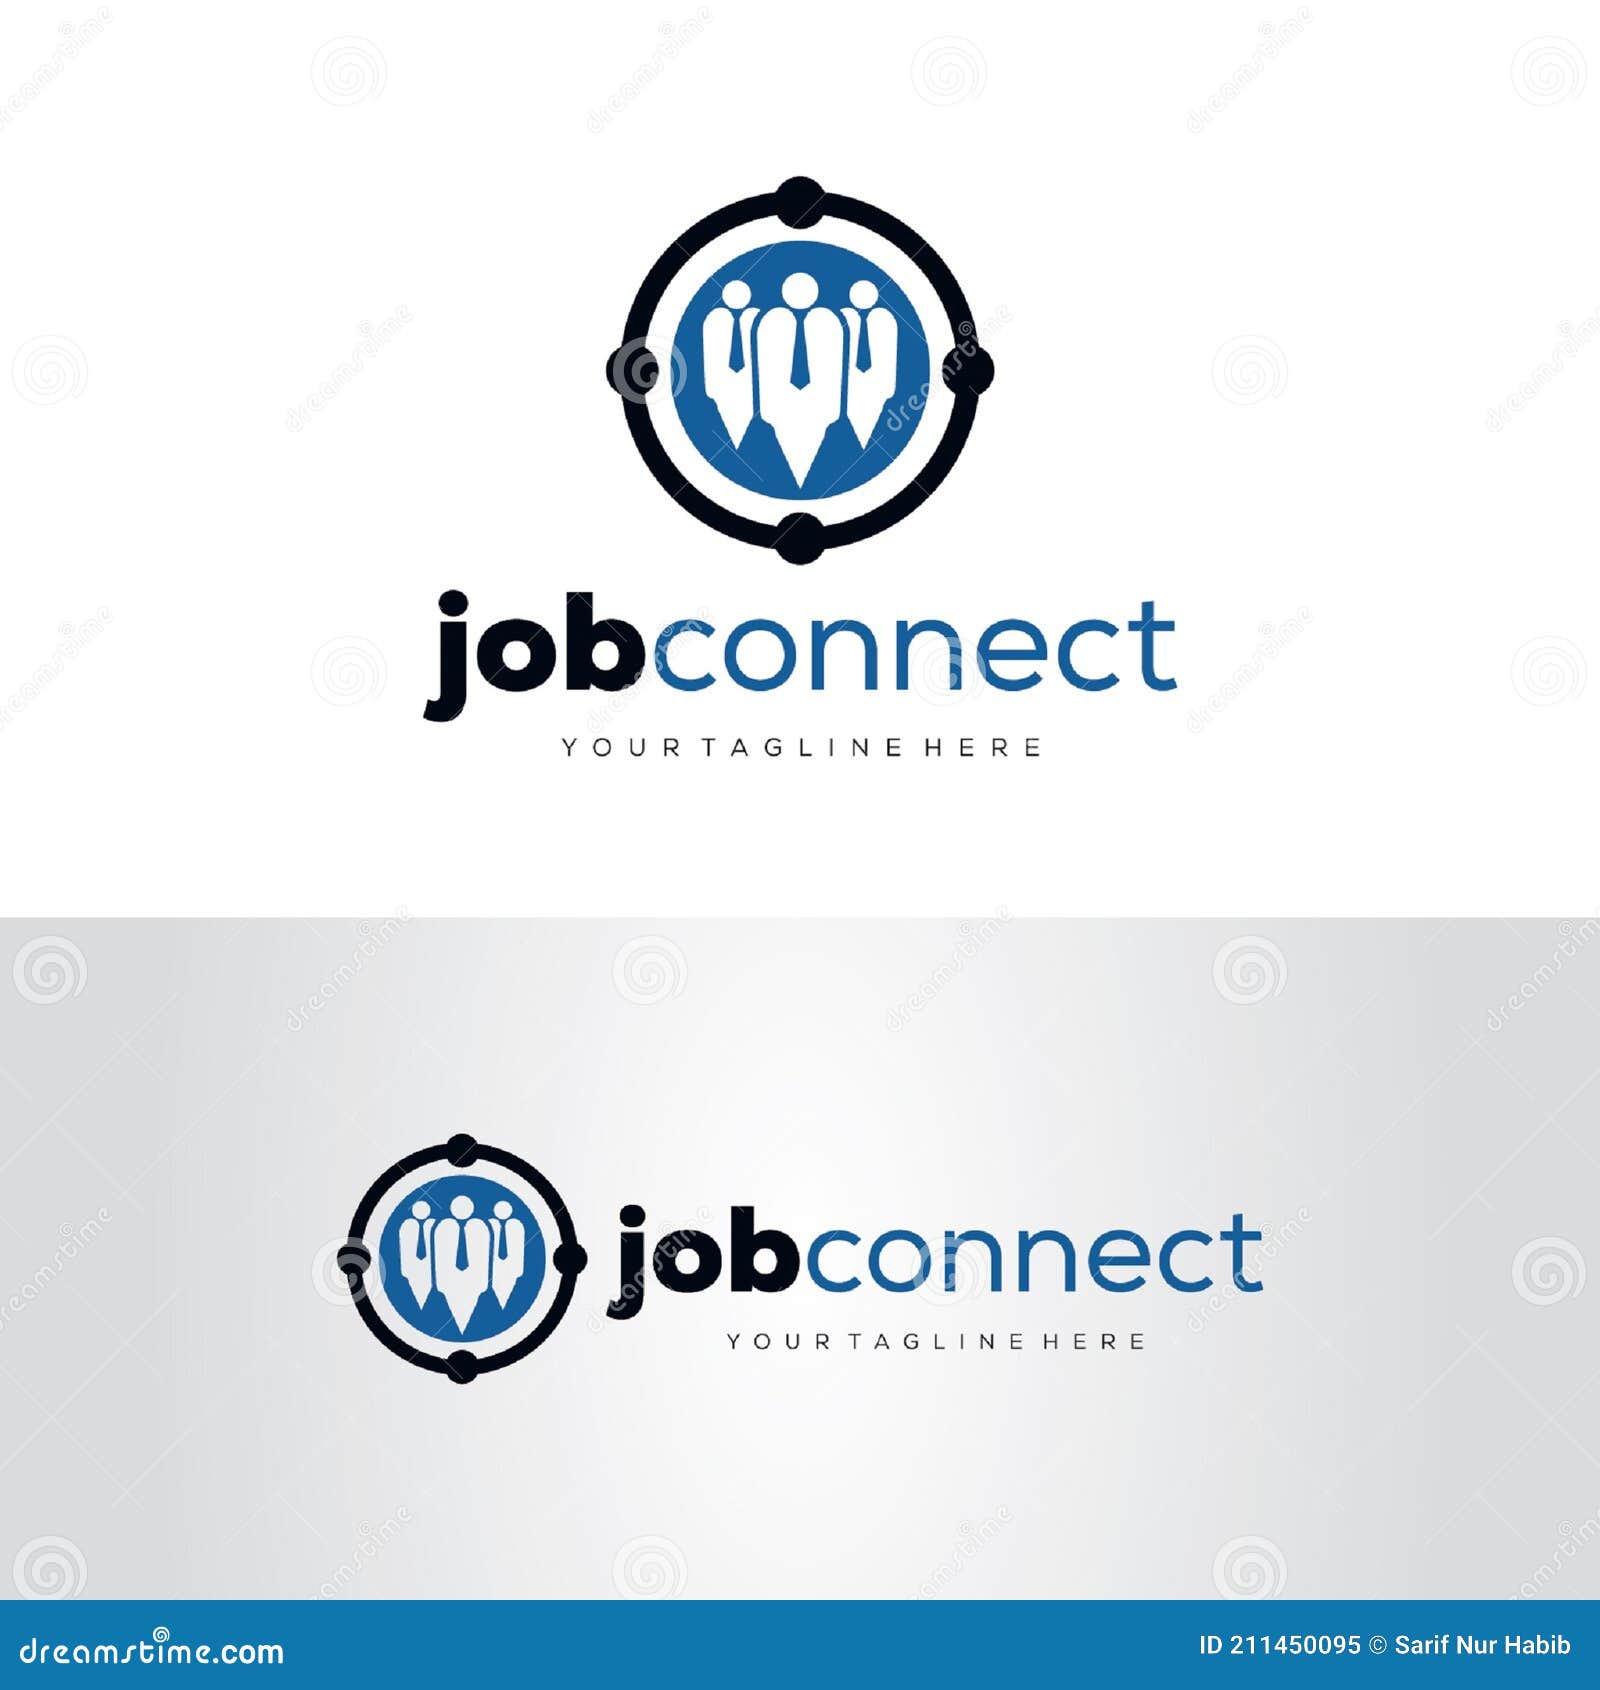 job connect logo design template job connect logo design template white background 211450095